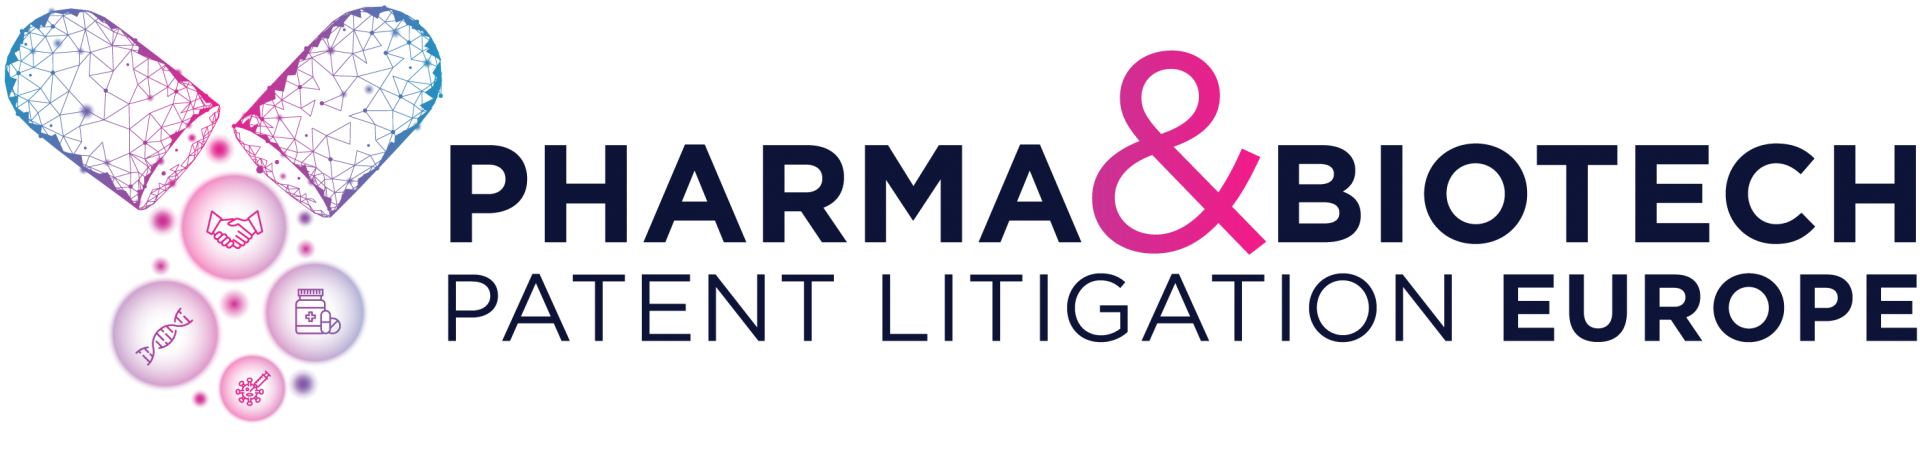 The Pharma & Biotech Patent Litigation Summit, Europe